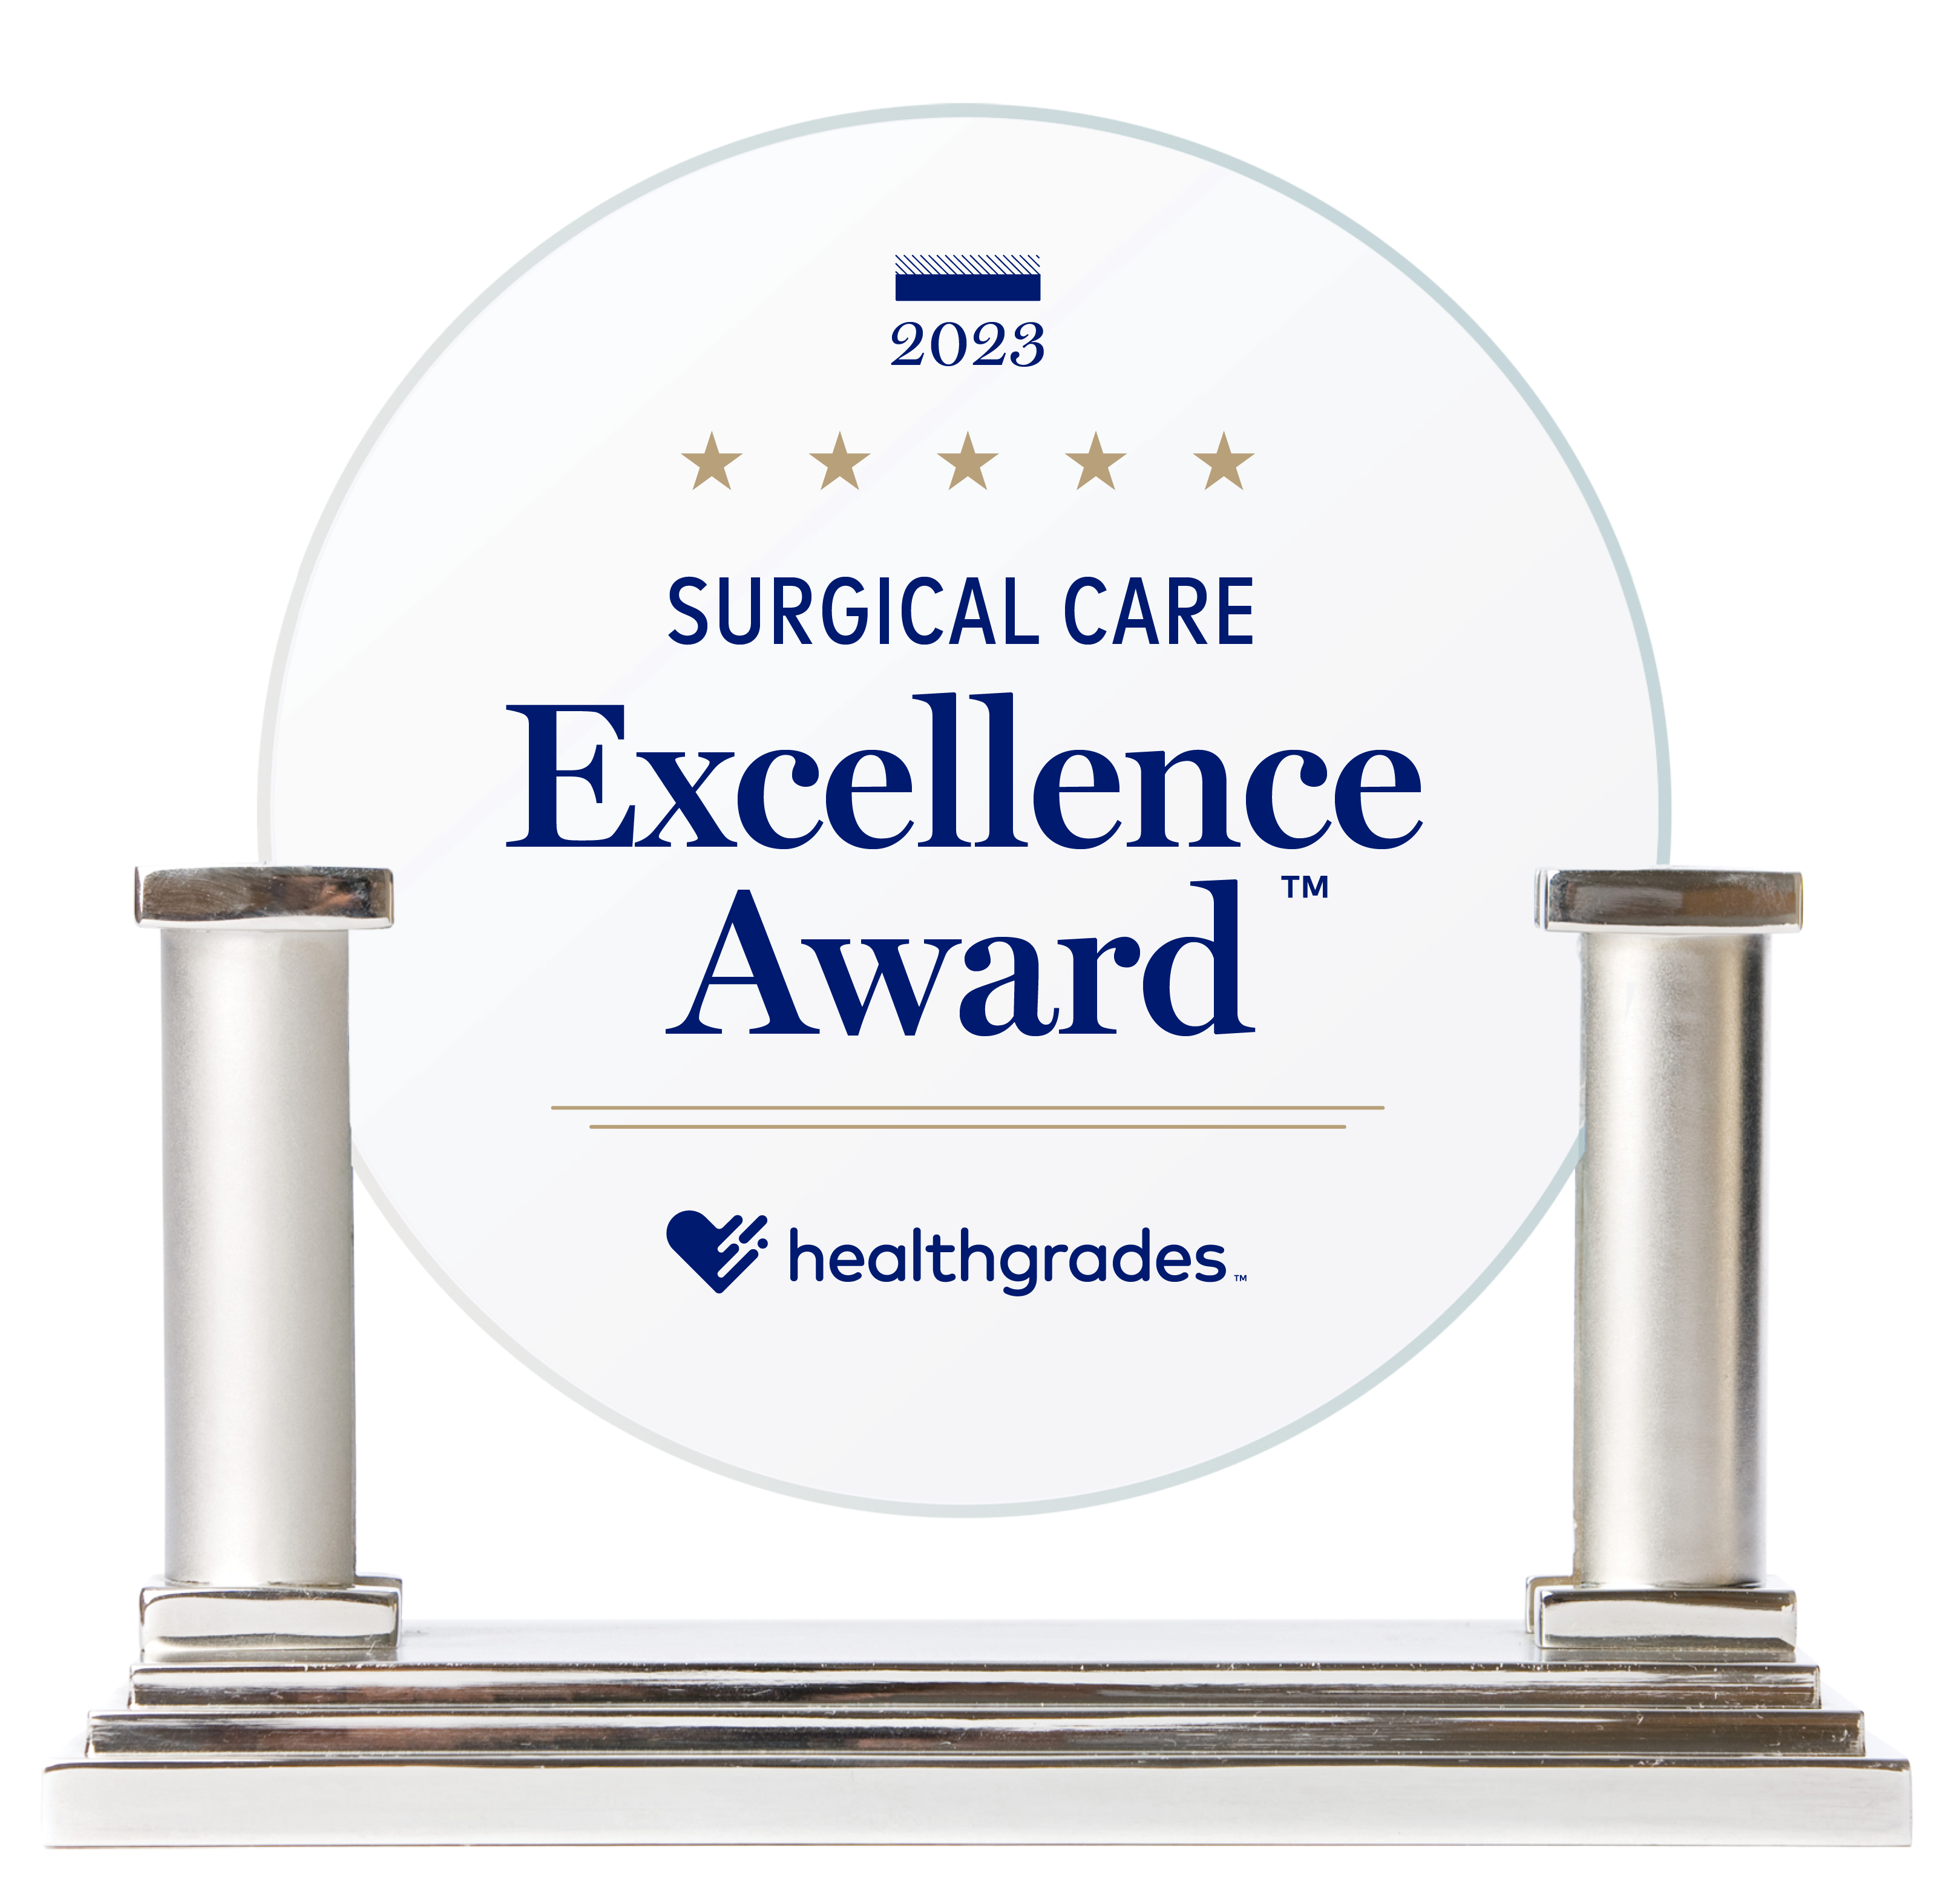 Surgical Care Excellence Award Healthgrades